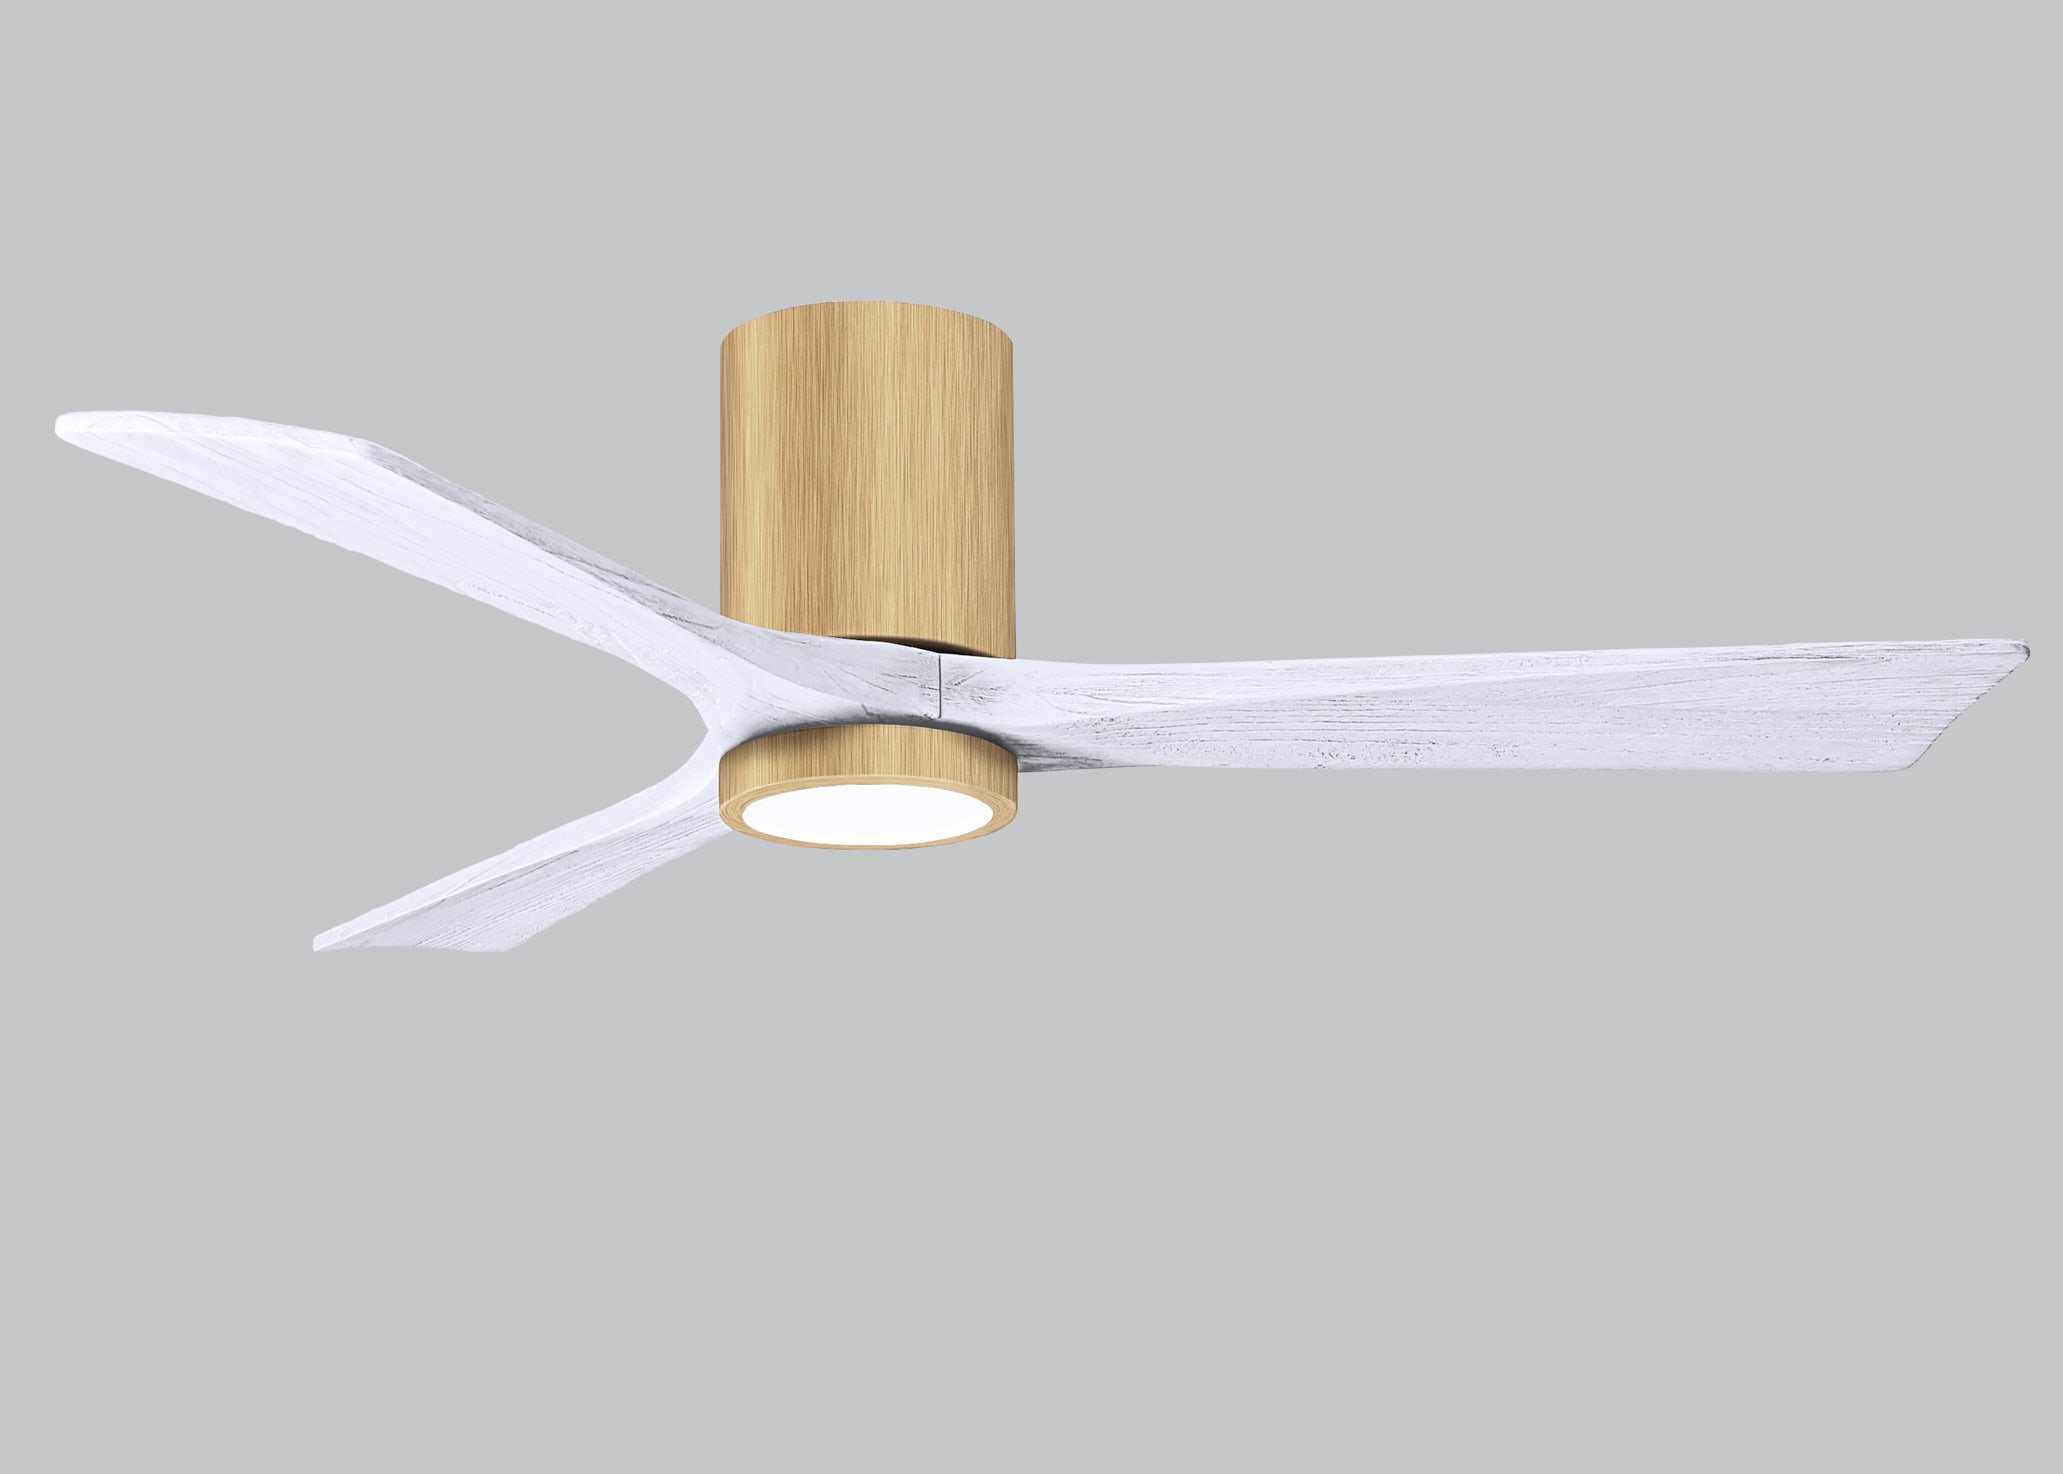 Irene-3HLK 6-speed ceiling fan in light maple finish with 52